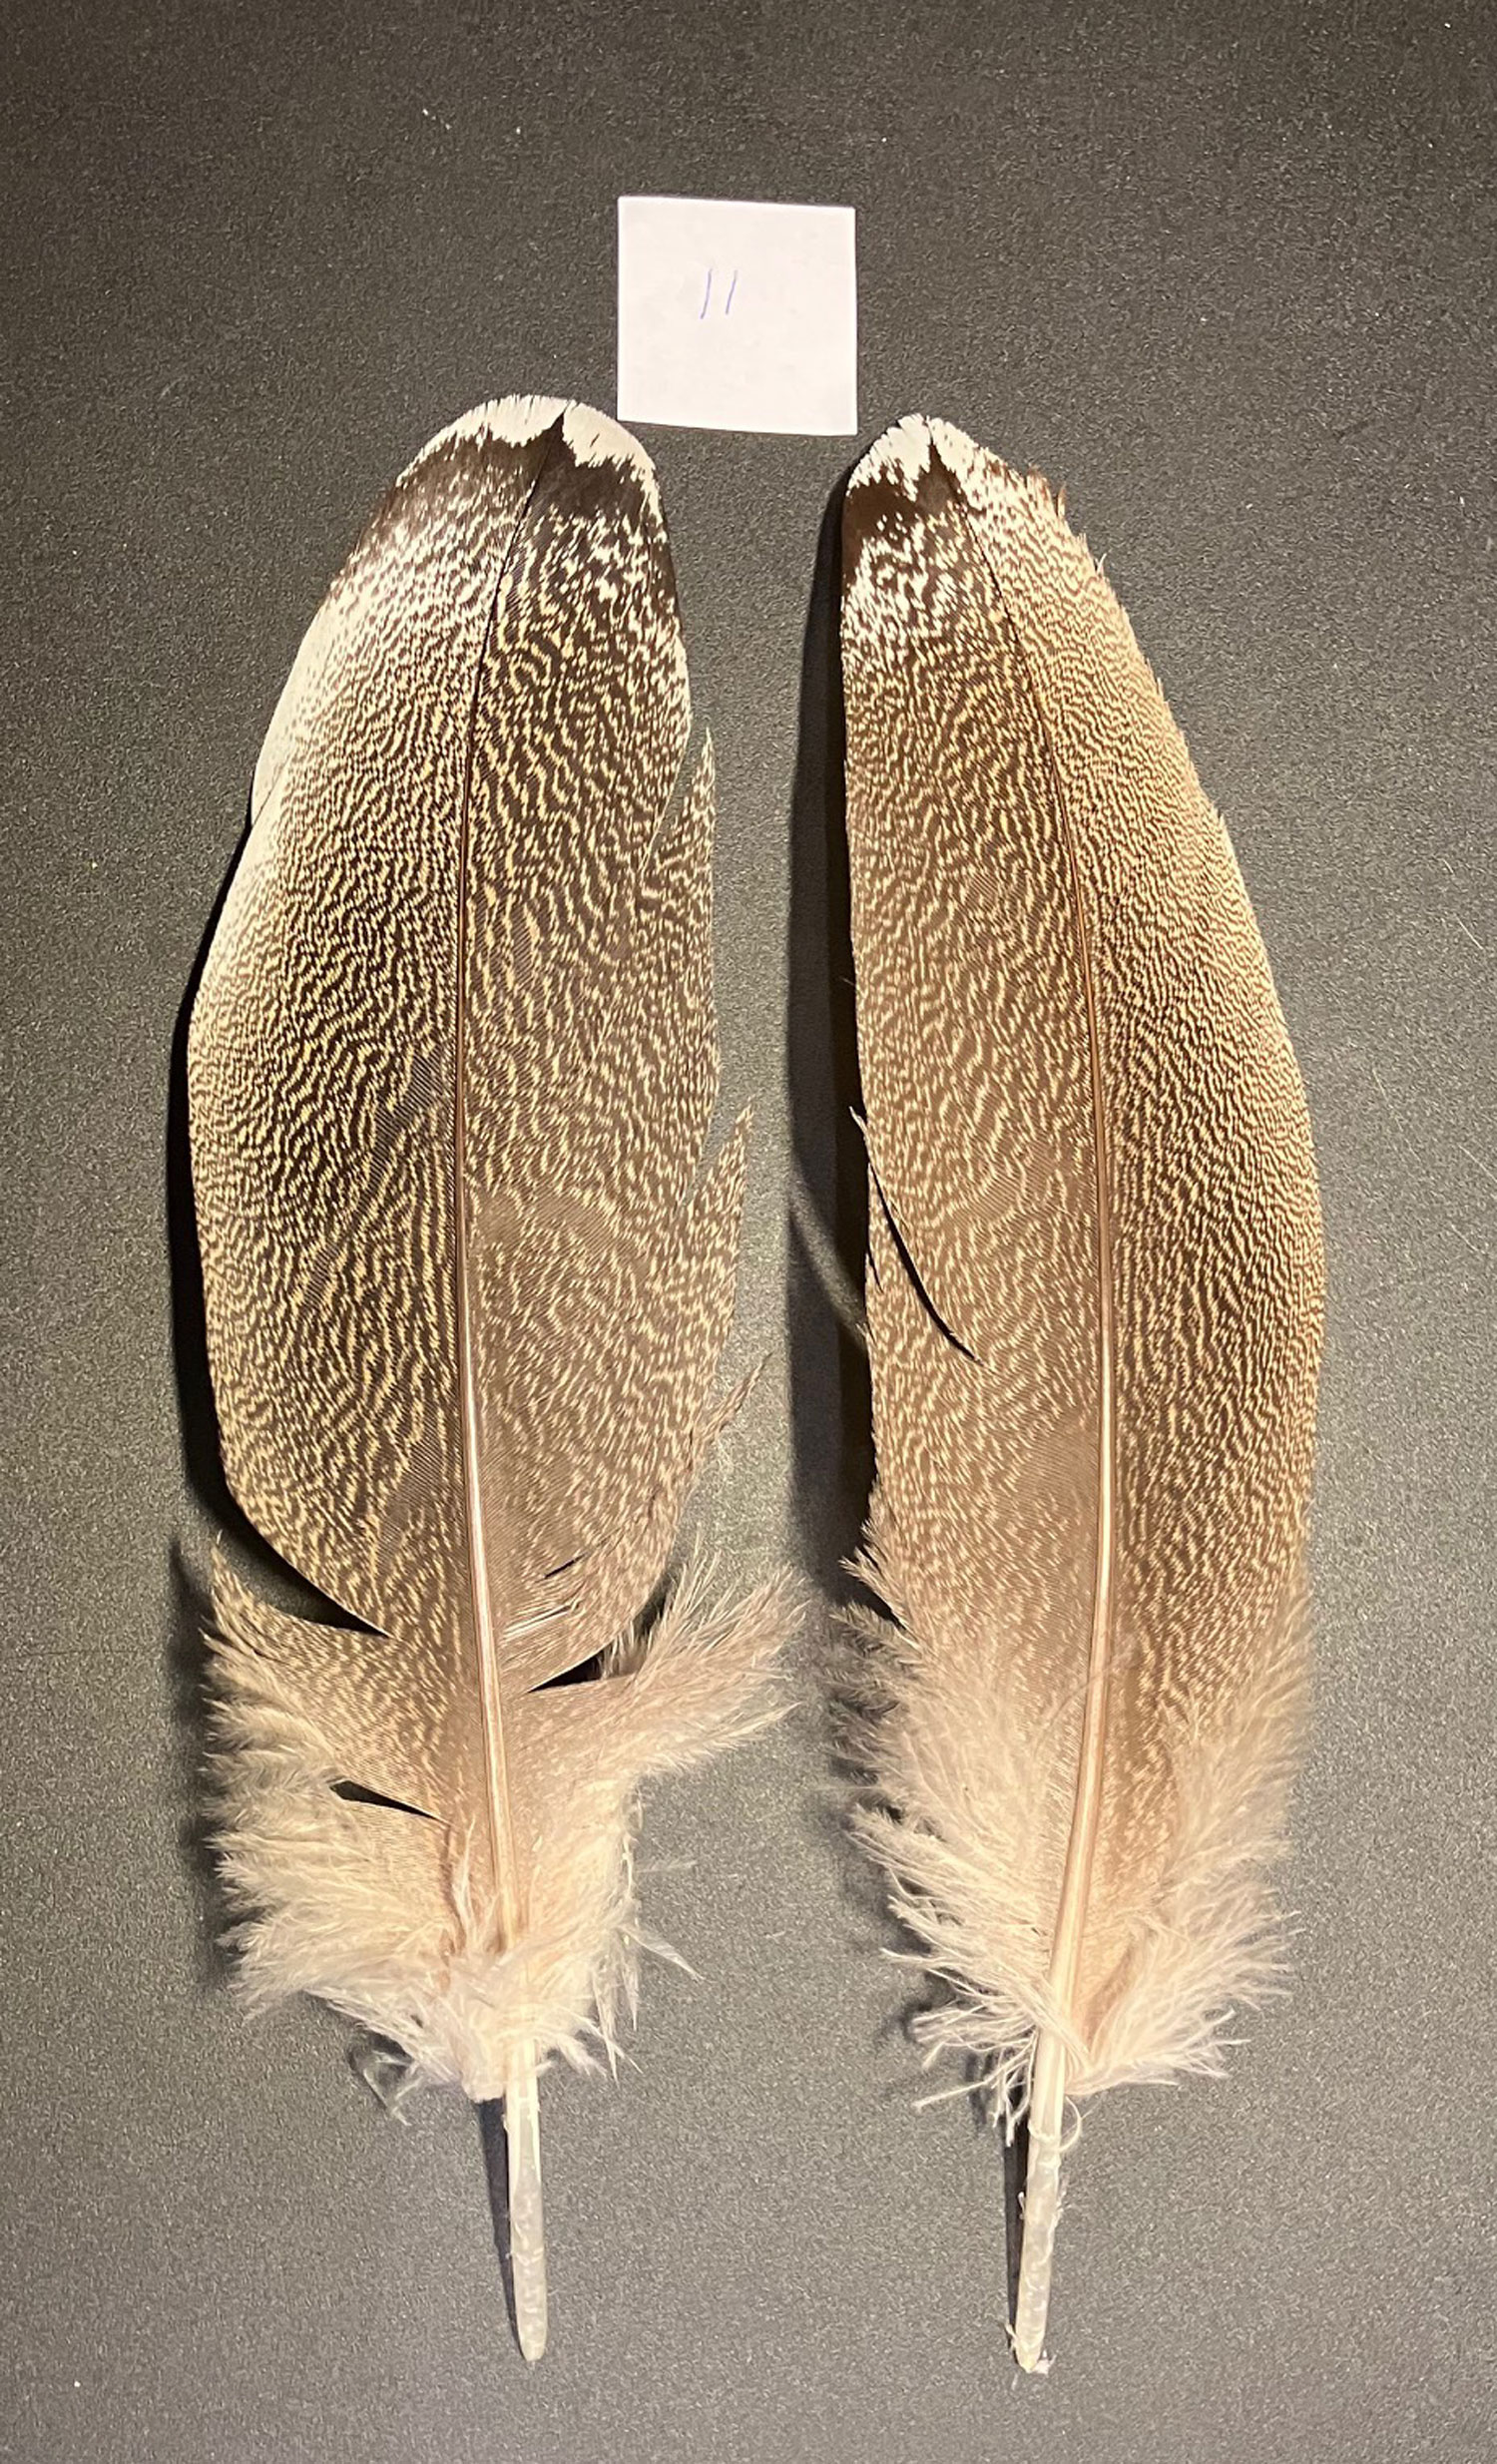 Kori bustard shoulder feather 11